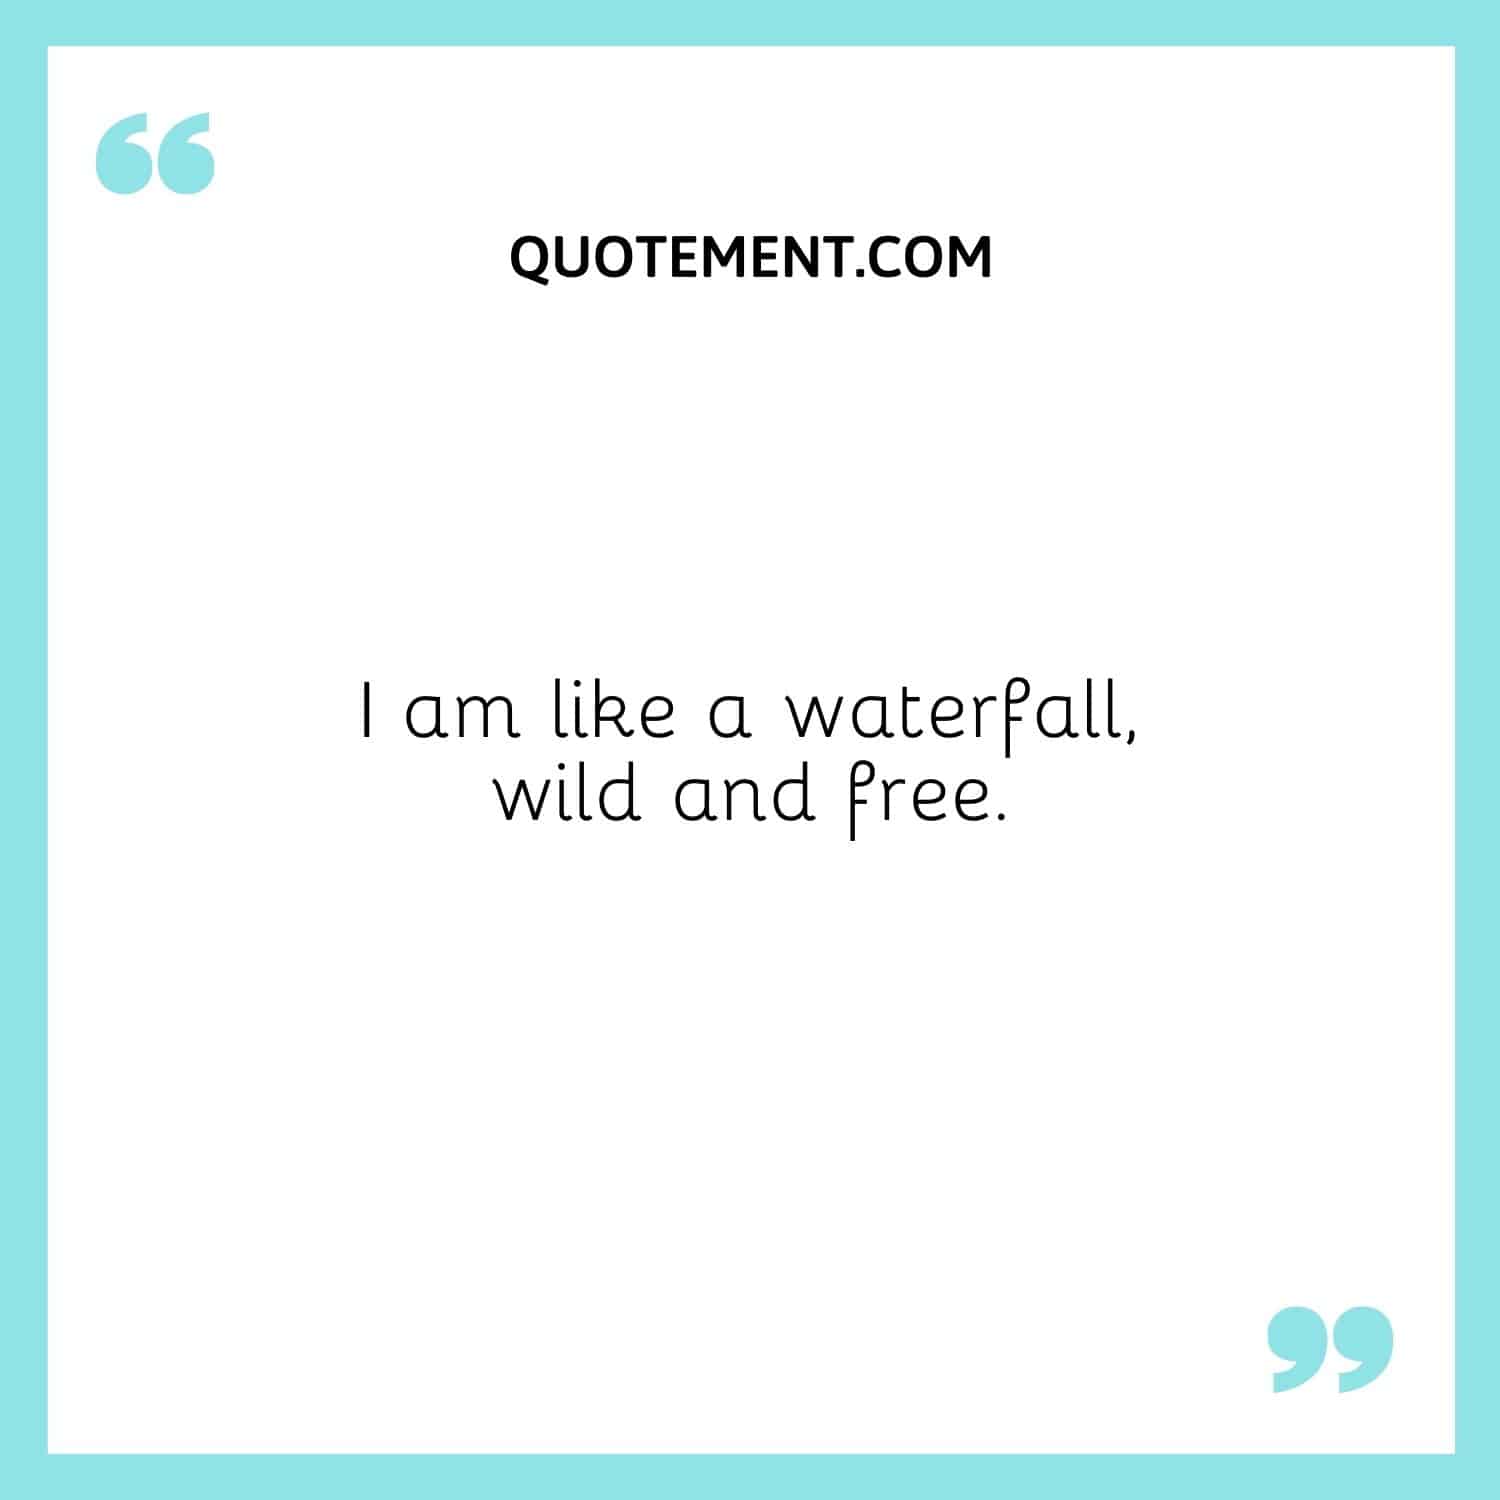 I am like a waterfall, wild and free